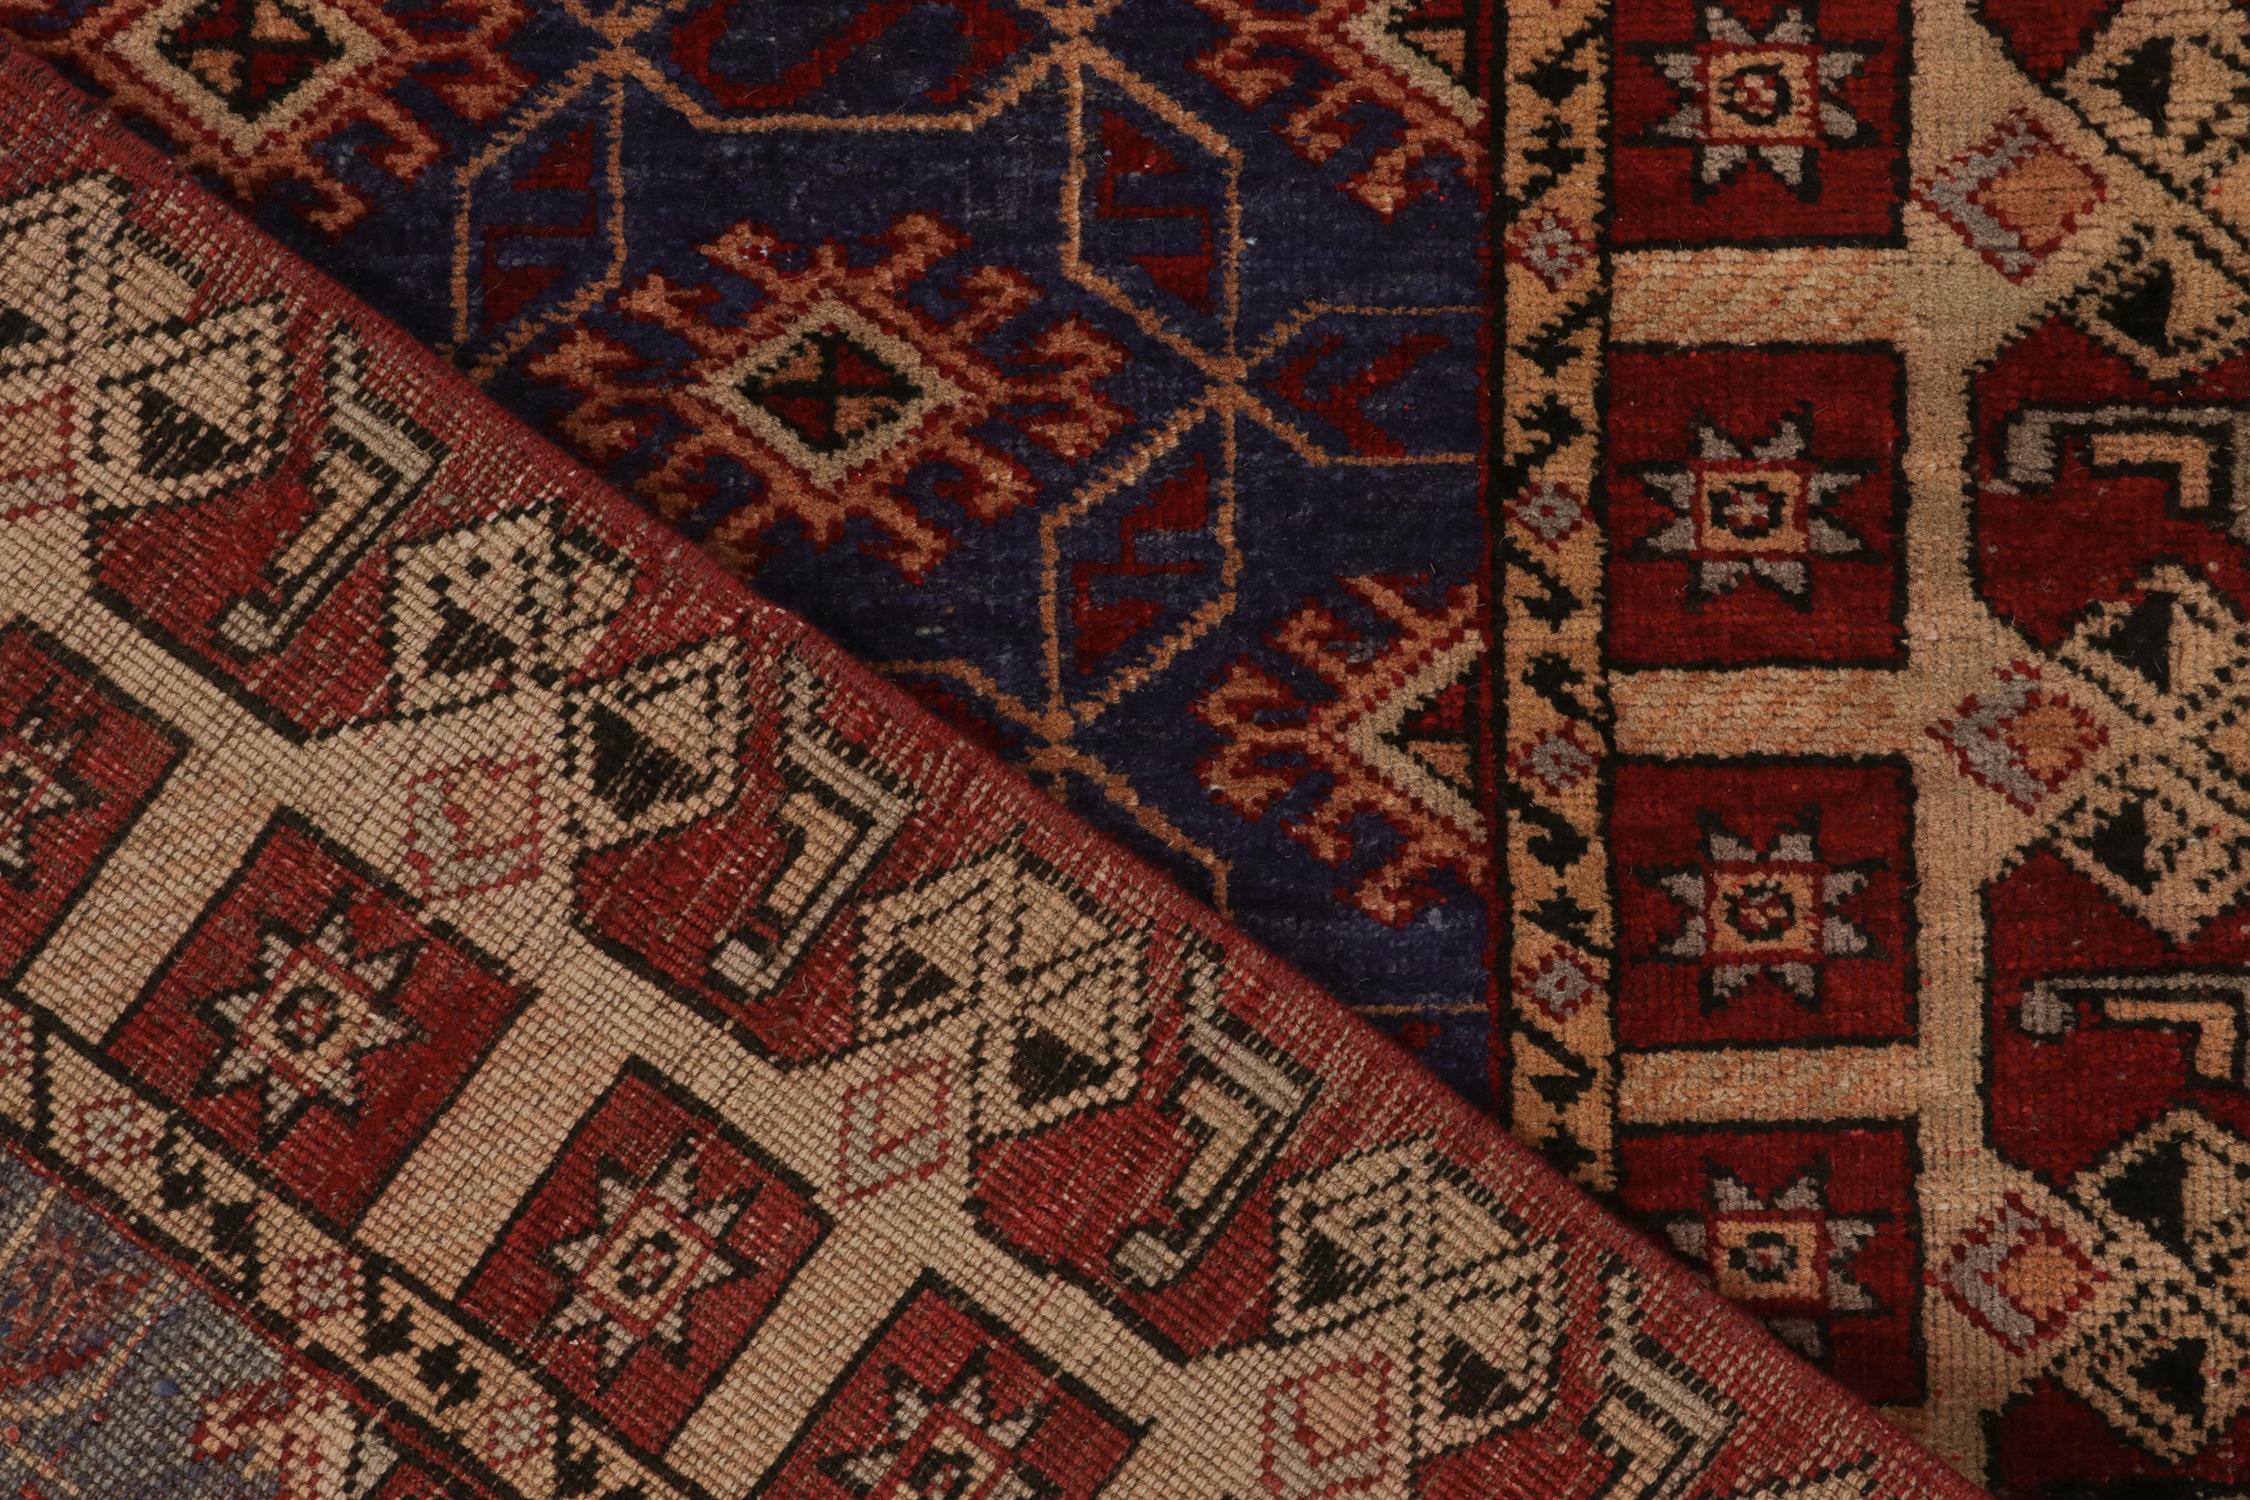 Wool Vintage Zeki Müren Rug in Indigo with Red and Beige Pattern, by Rug & Kilim For Sale